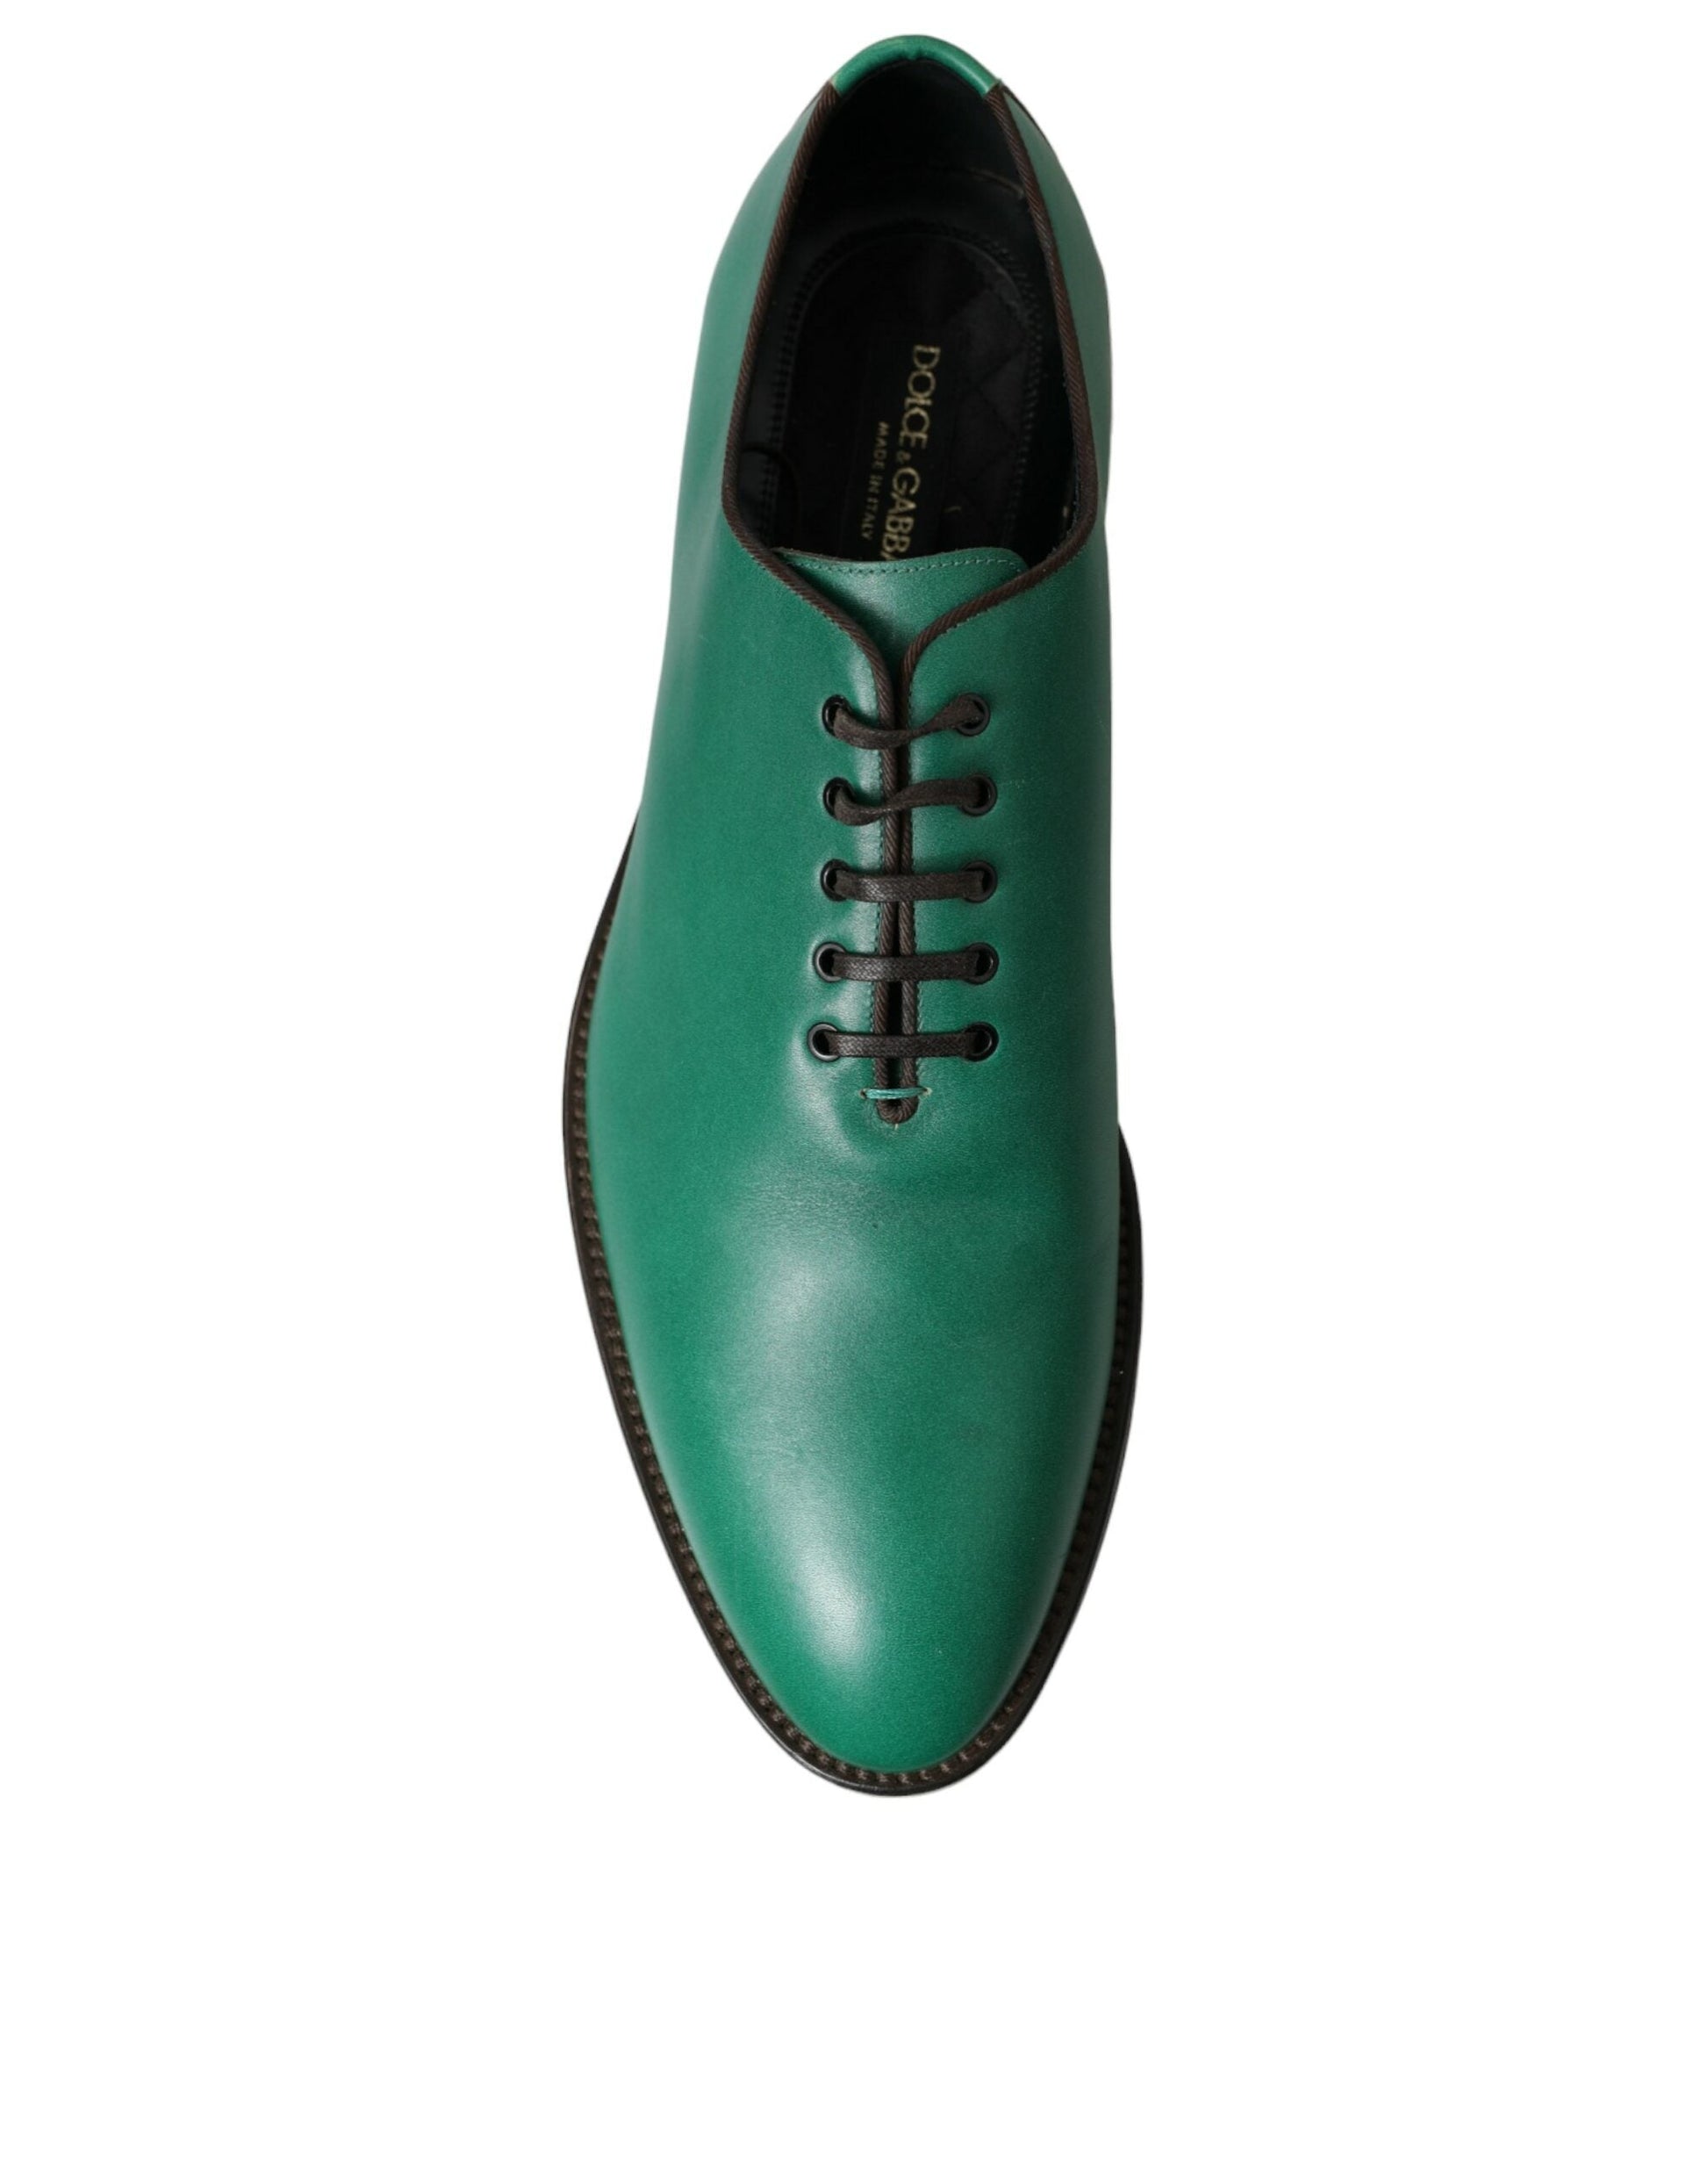 Fashionsarah.com Fashionsarah.com Dolce & Gabbana Green Leather Lace Up Oxford Dress Shoes